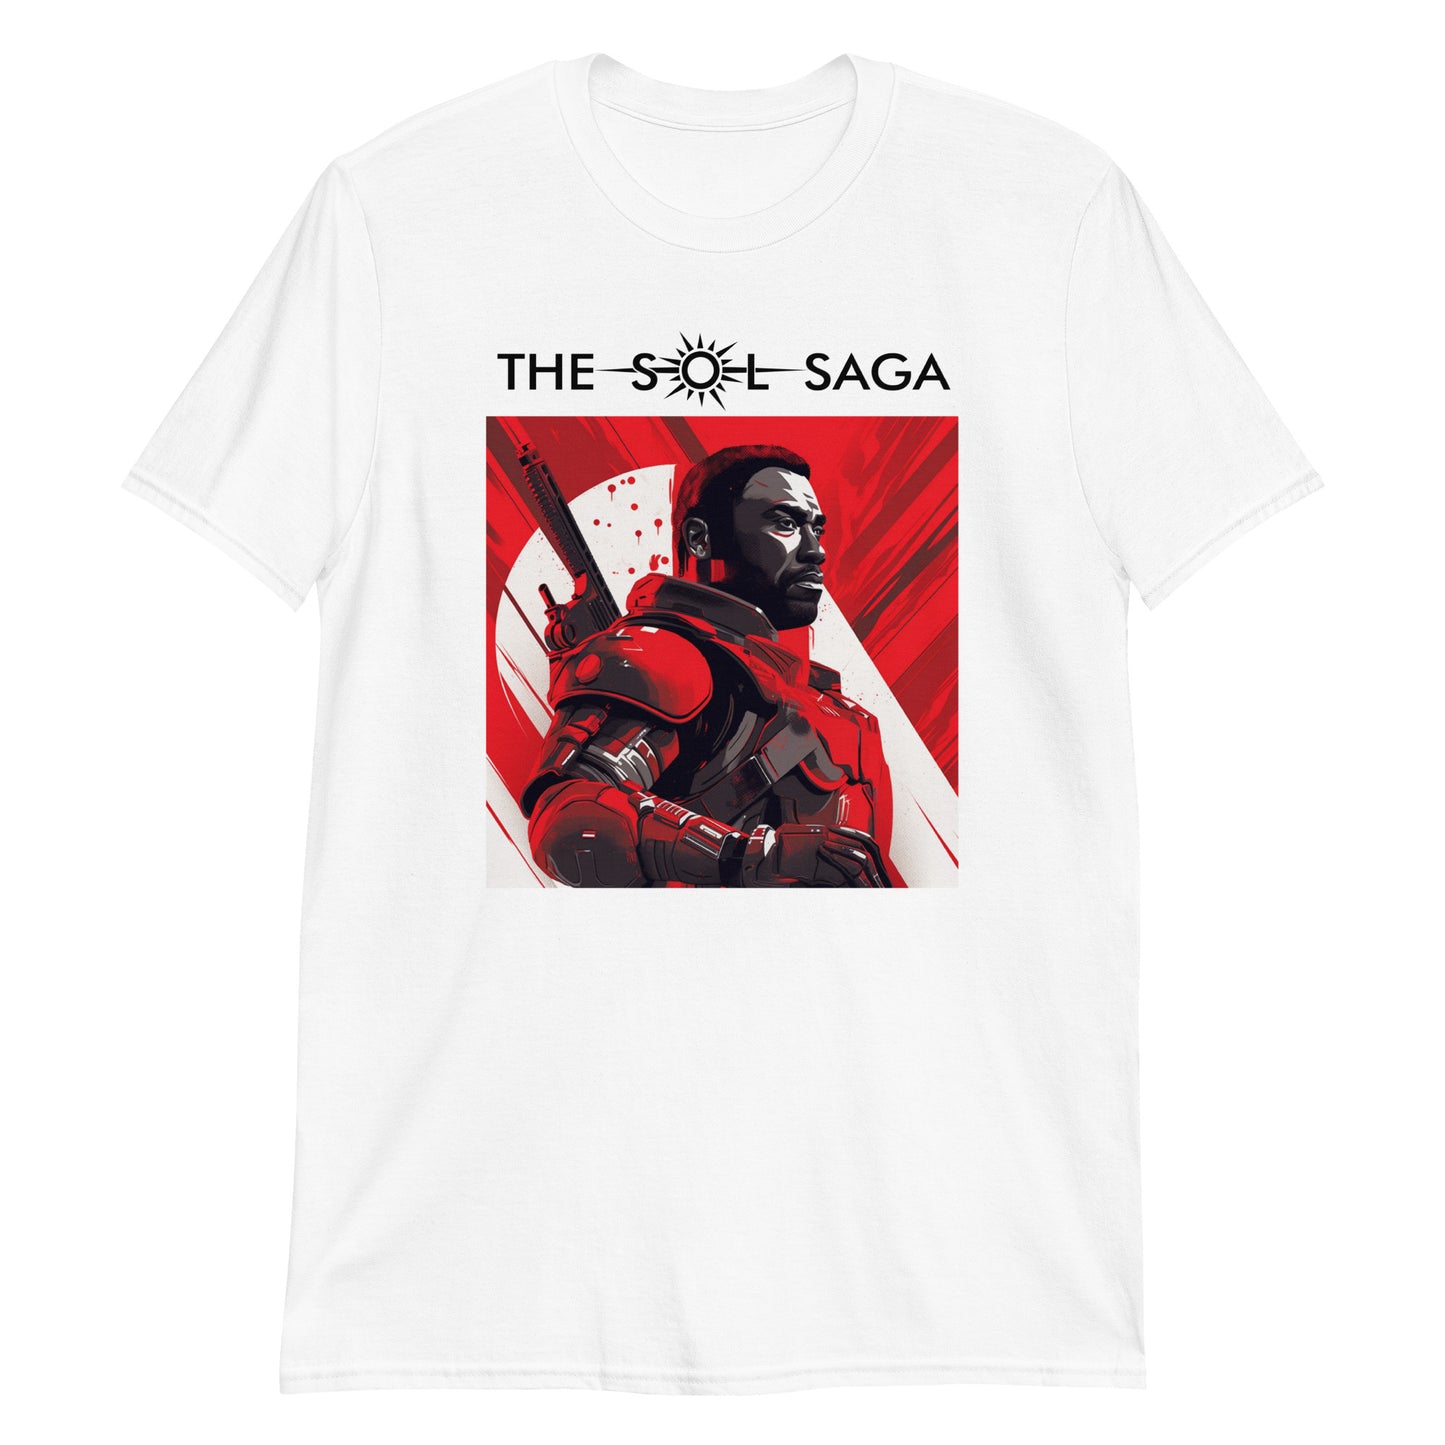 The Sol Saga - Brennan - Short-Sleeve Unisex T-Shirt